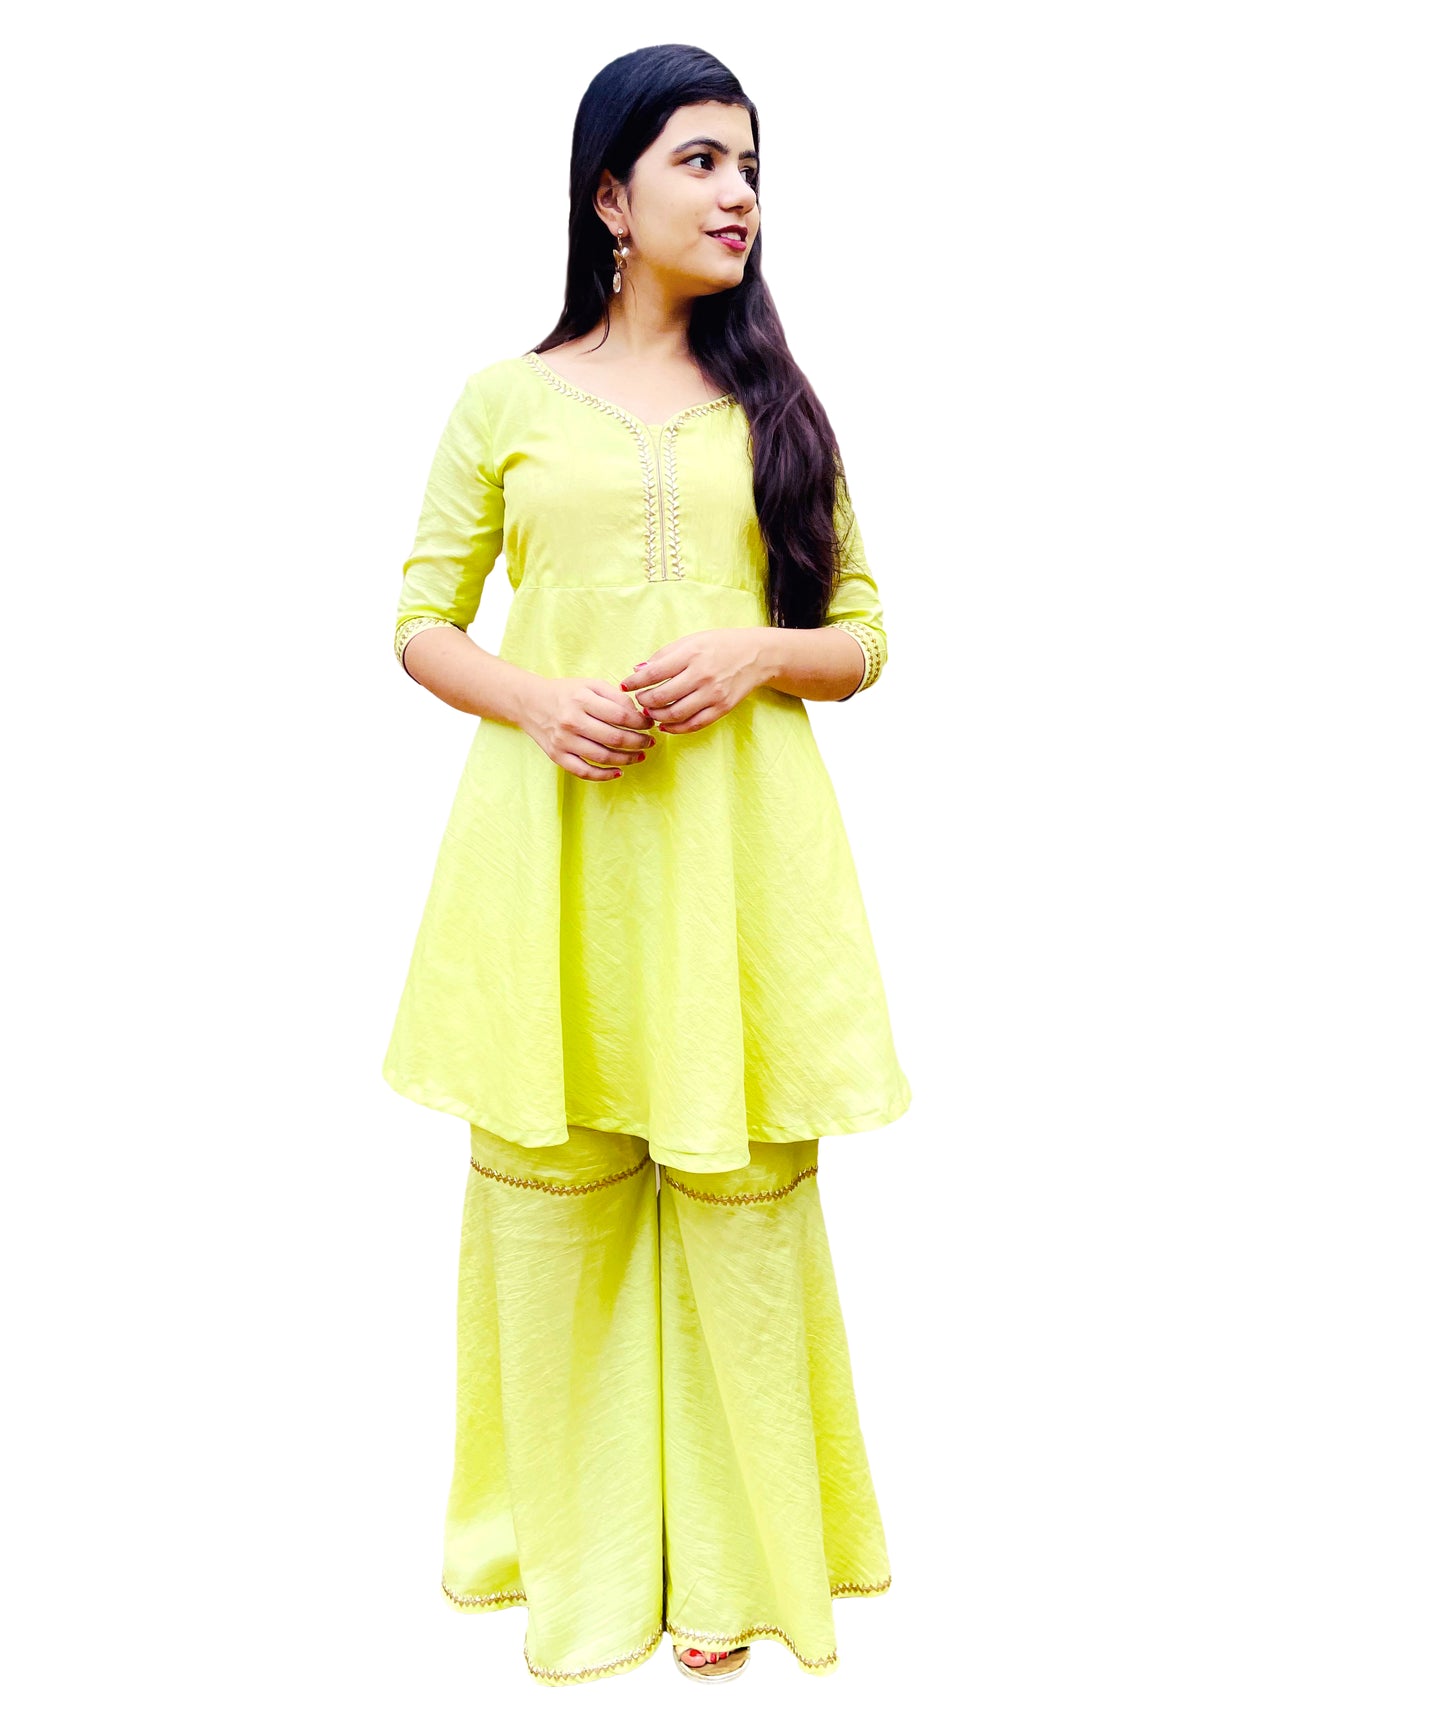 Light yellow green color Silk Gharara Dress with Embroidered Net Dupatta